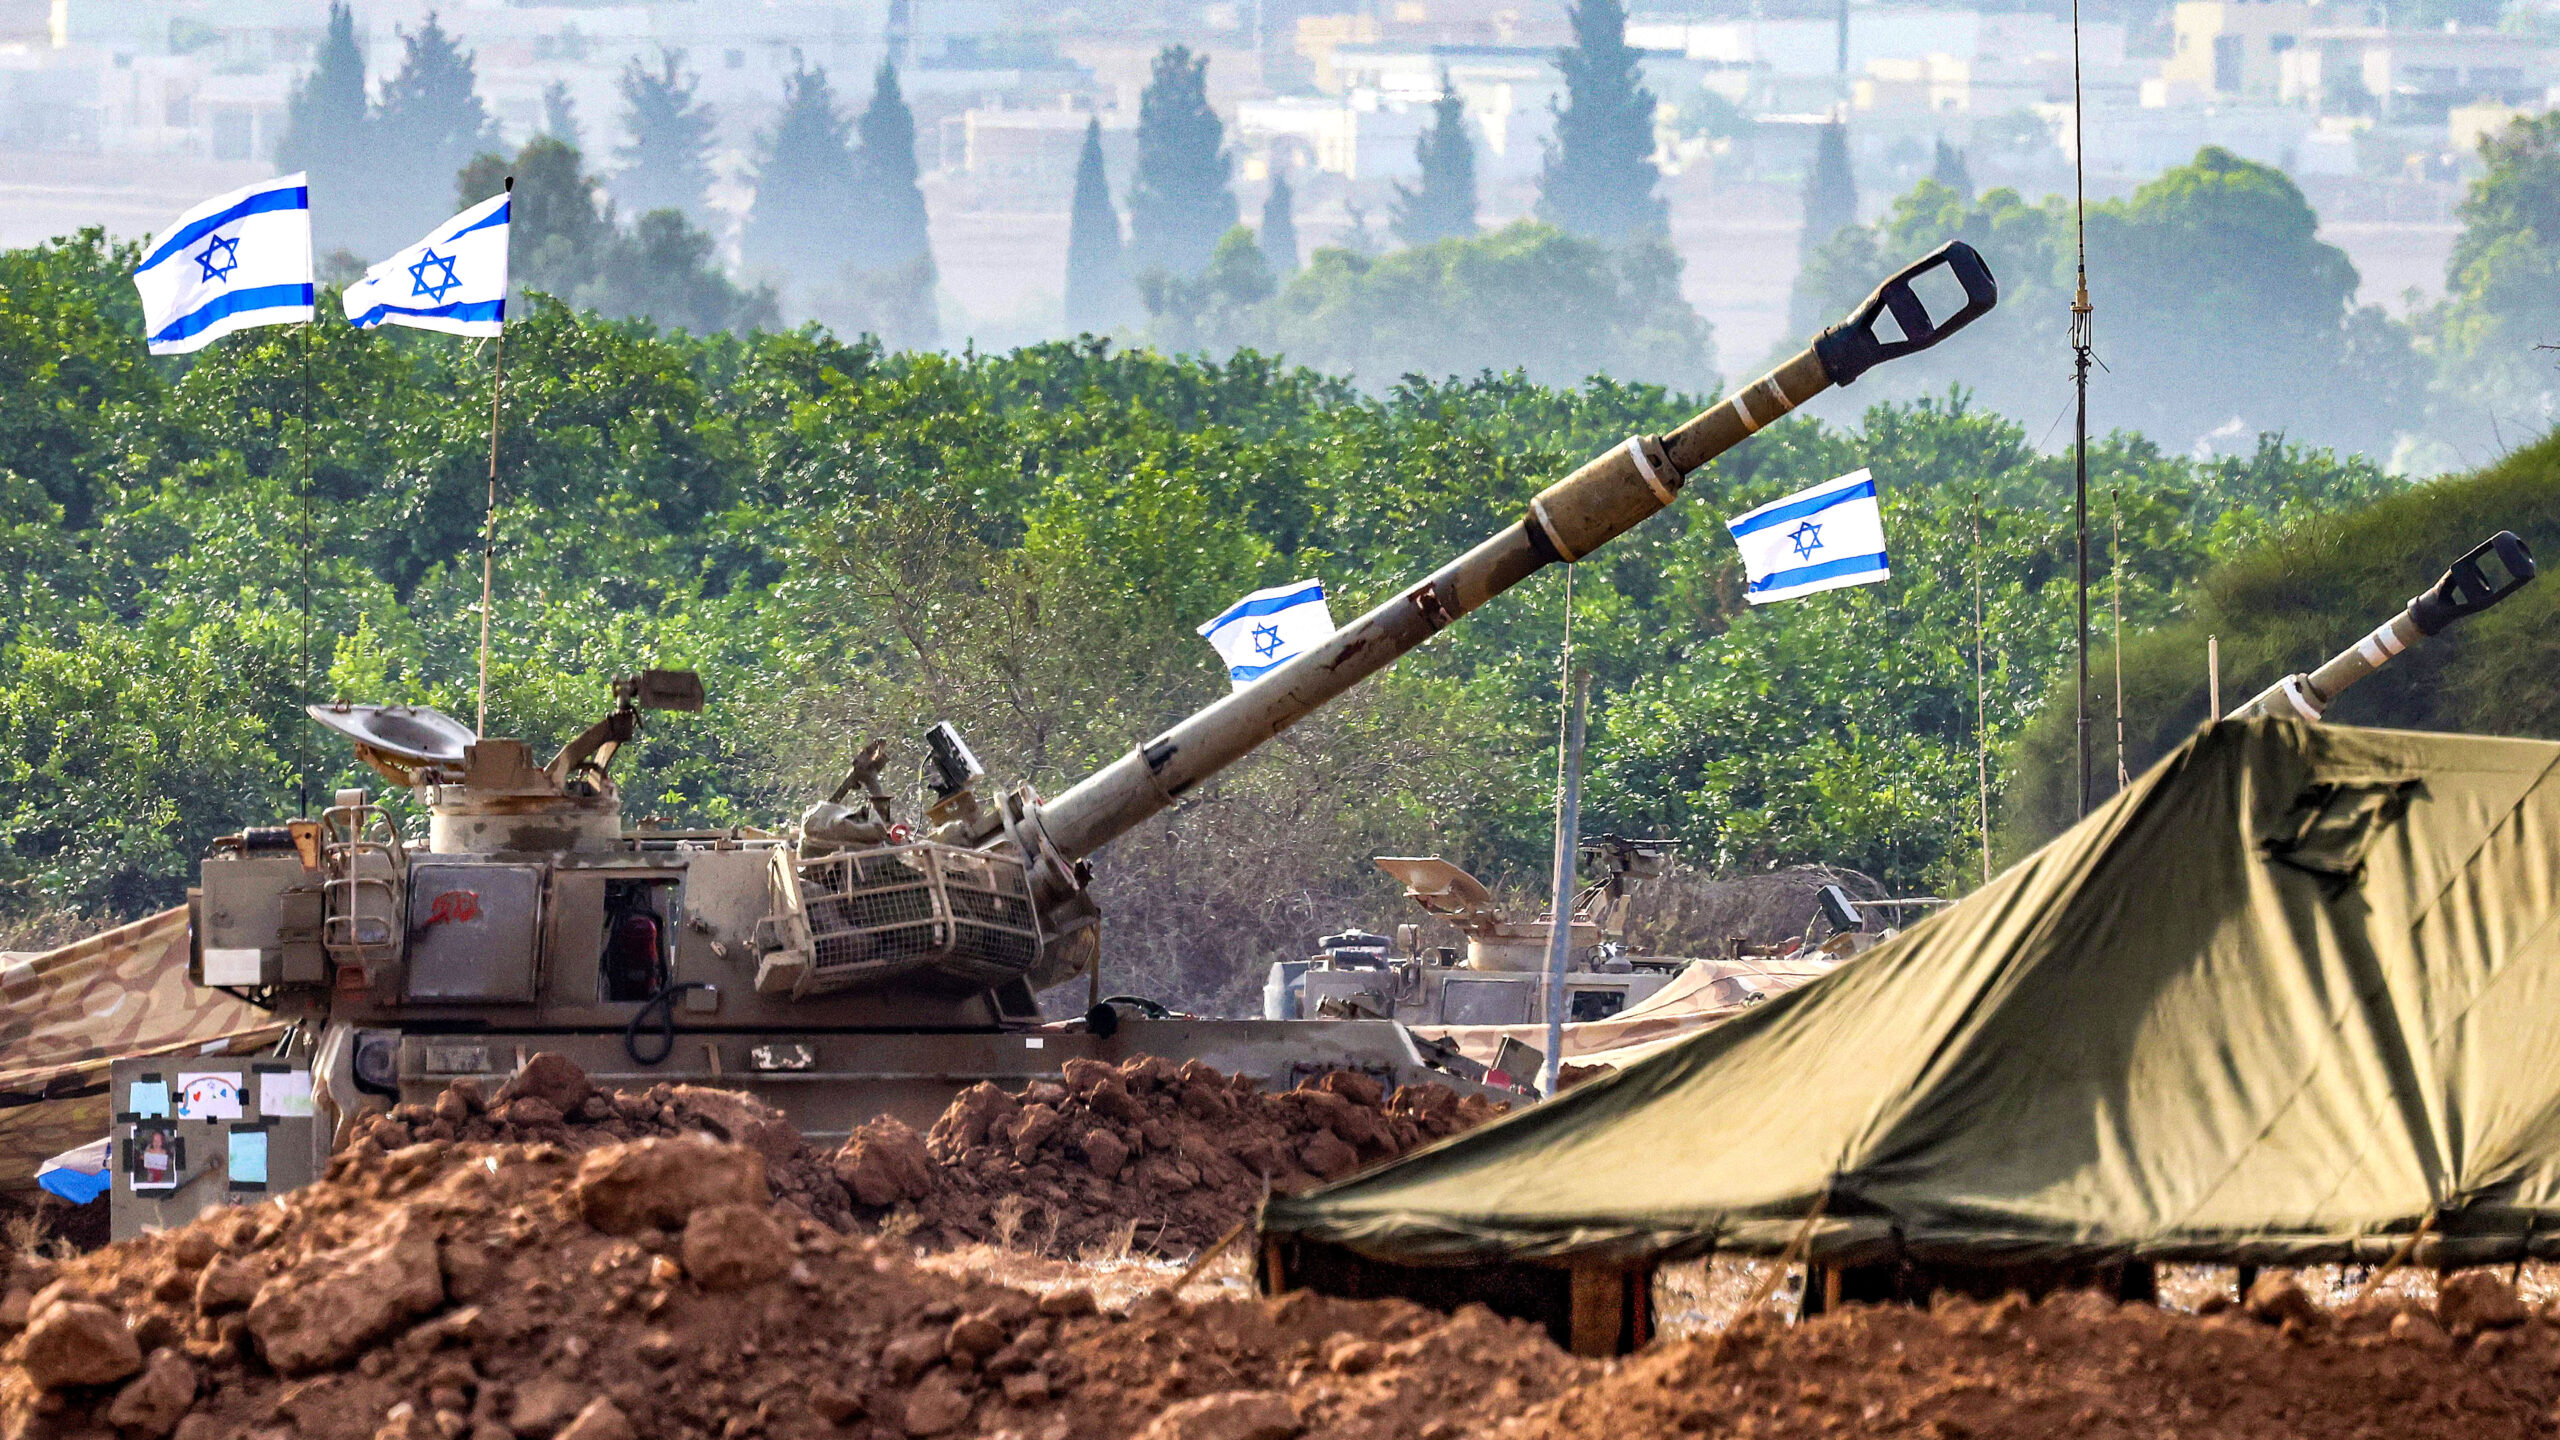 Israel Releases Footage Of Large Number Of Tanks Entering, Operating Inside Gaza